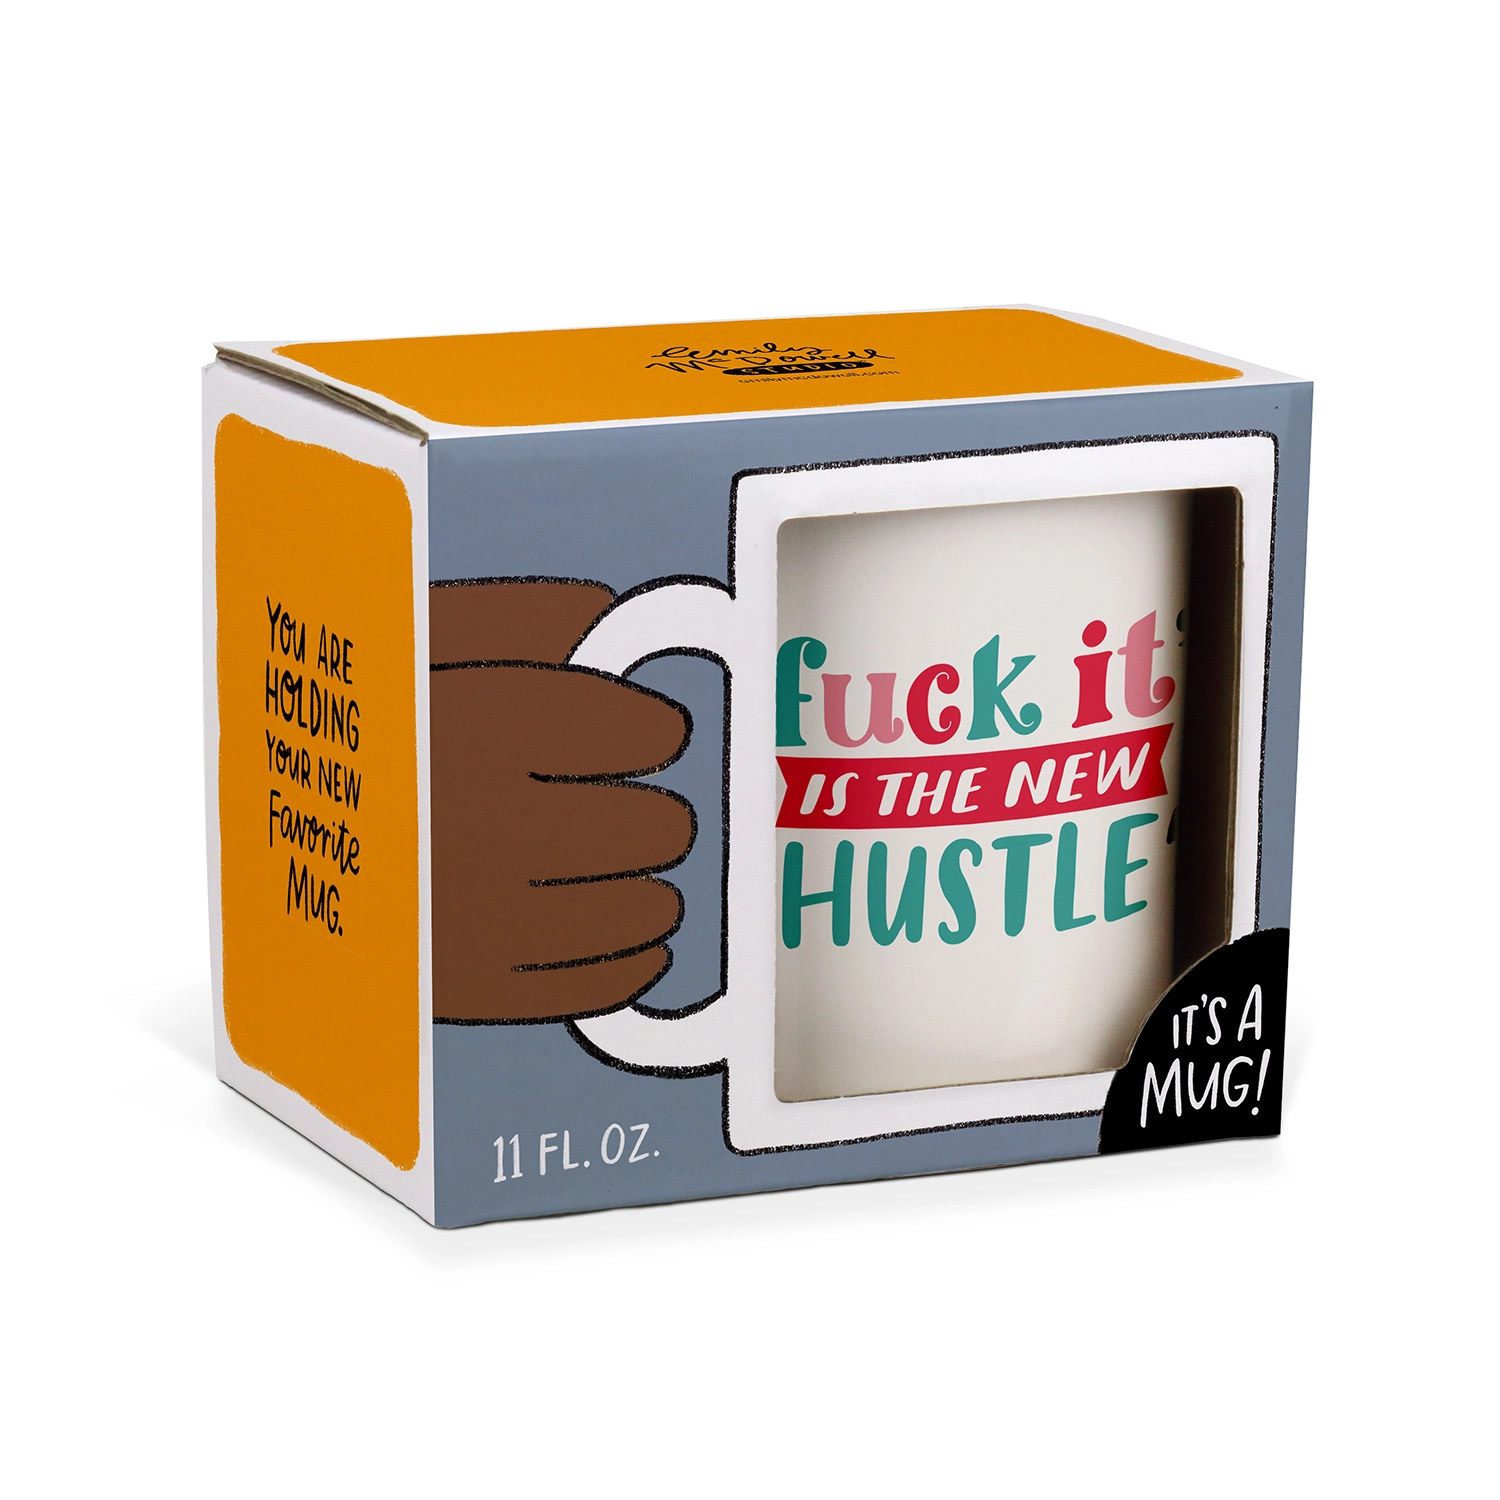 Fuck it is the new hustle mug